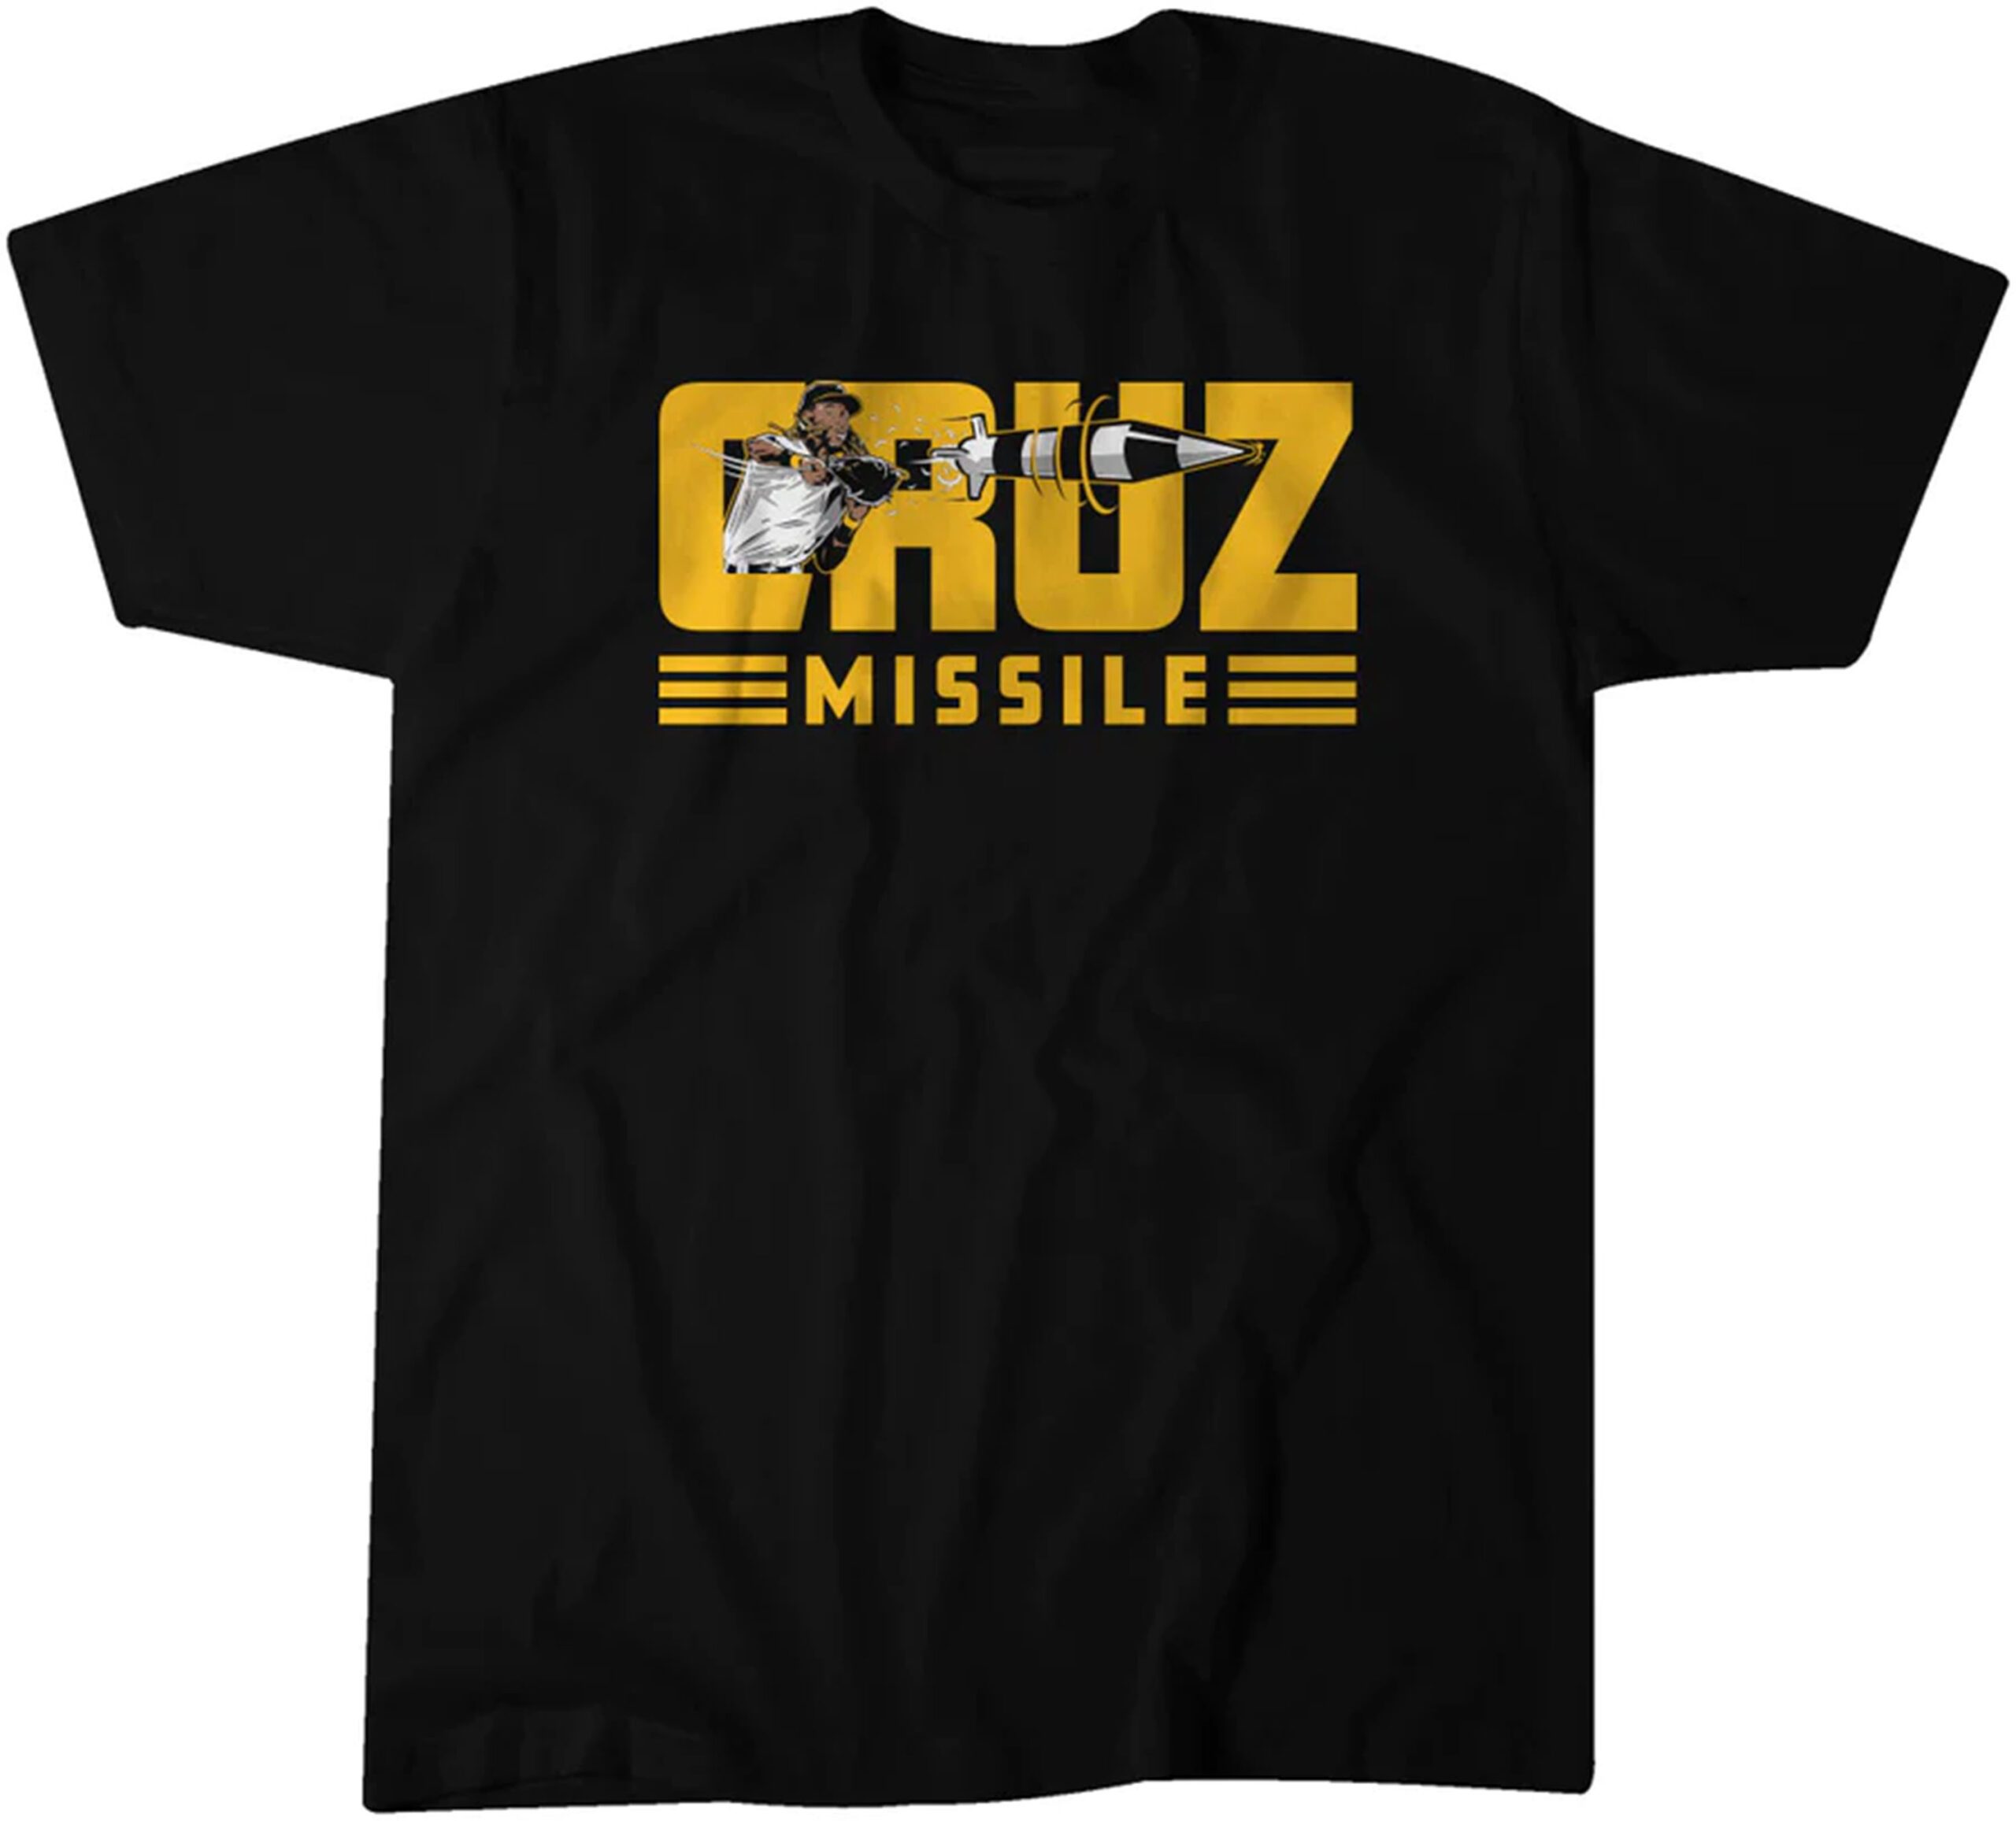 Oneil Cruz Missile Tee Shirt ShirtElephant Office